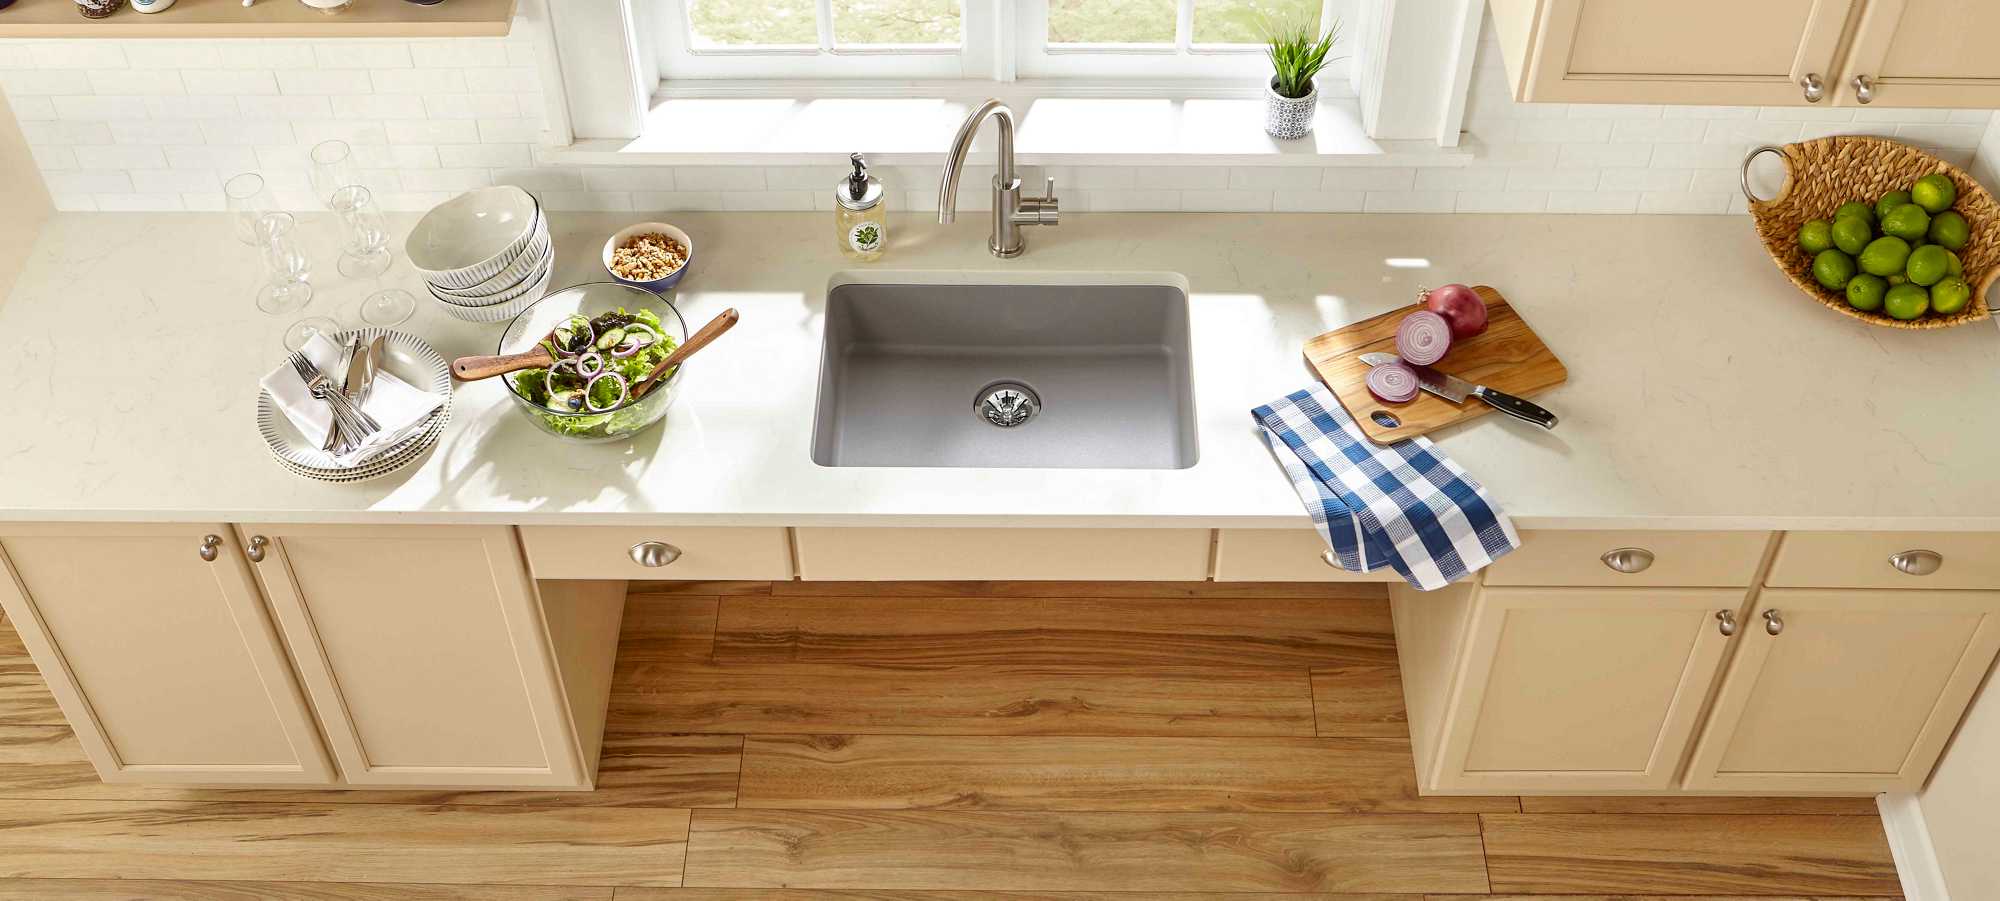 Elkay Ada Compliant Undermount Kitchen Sinks | Wow Blog